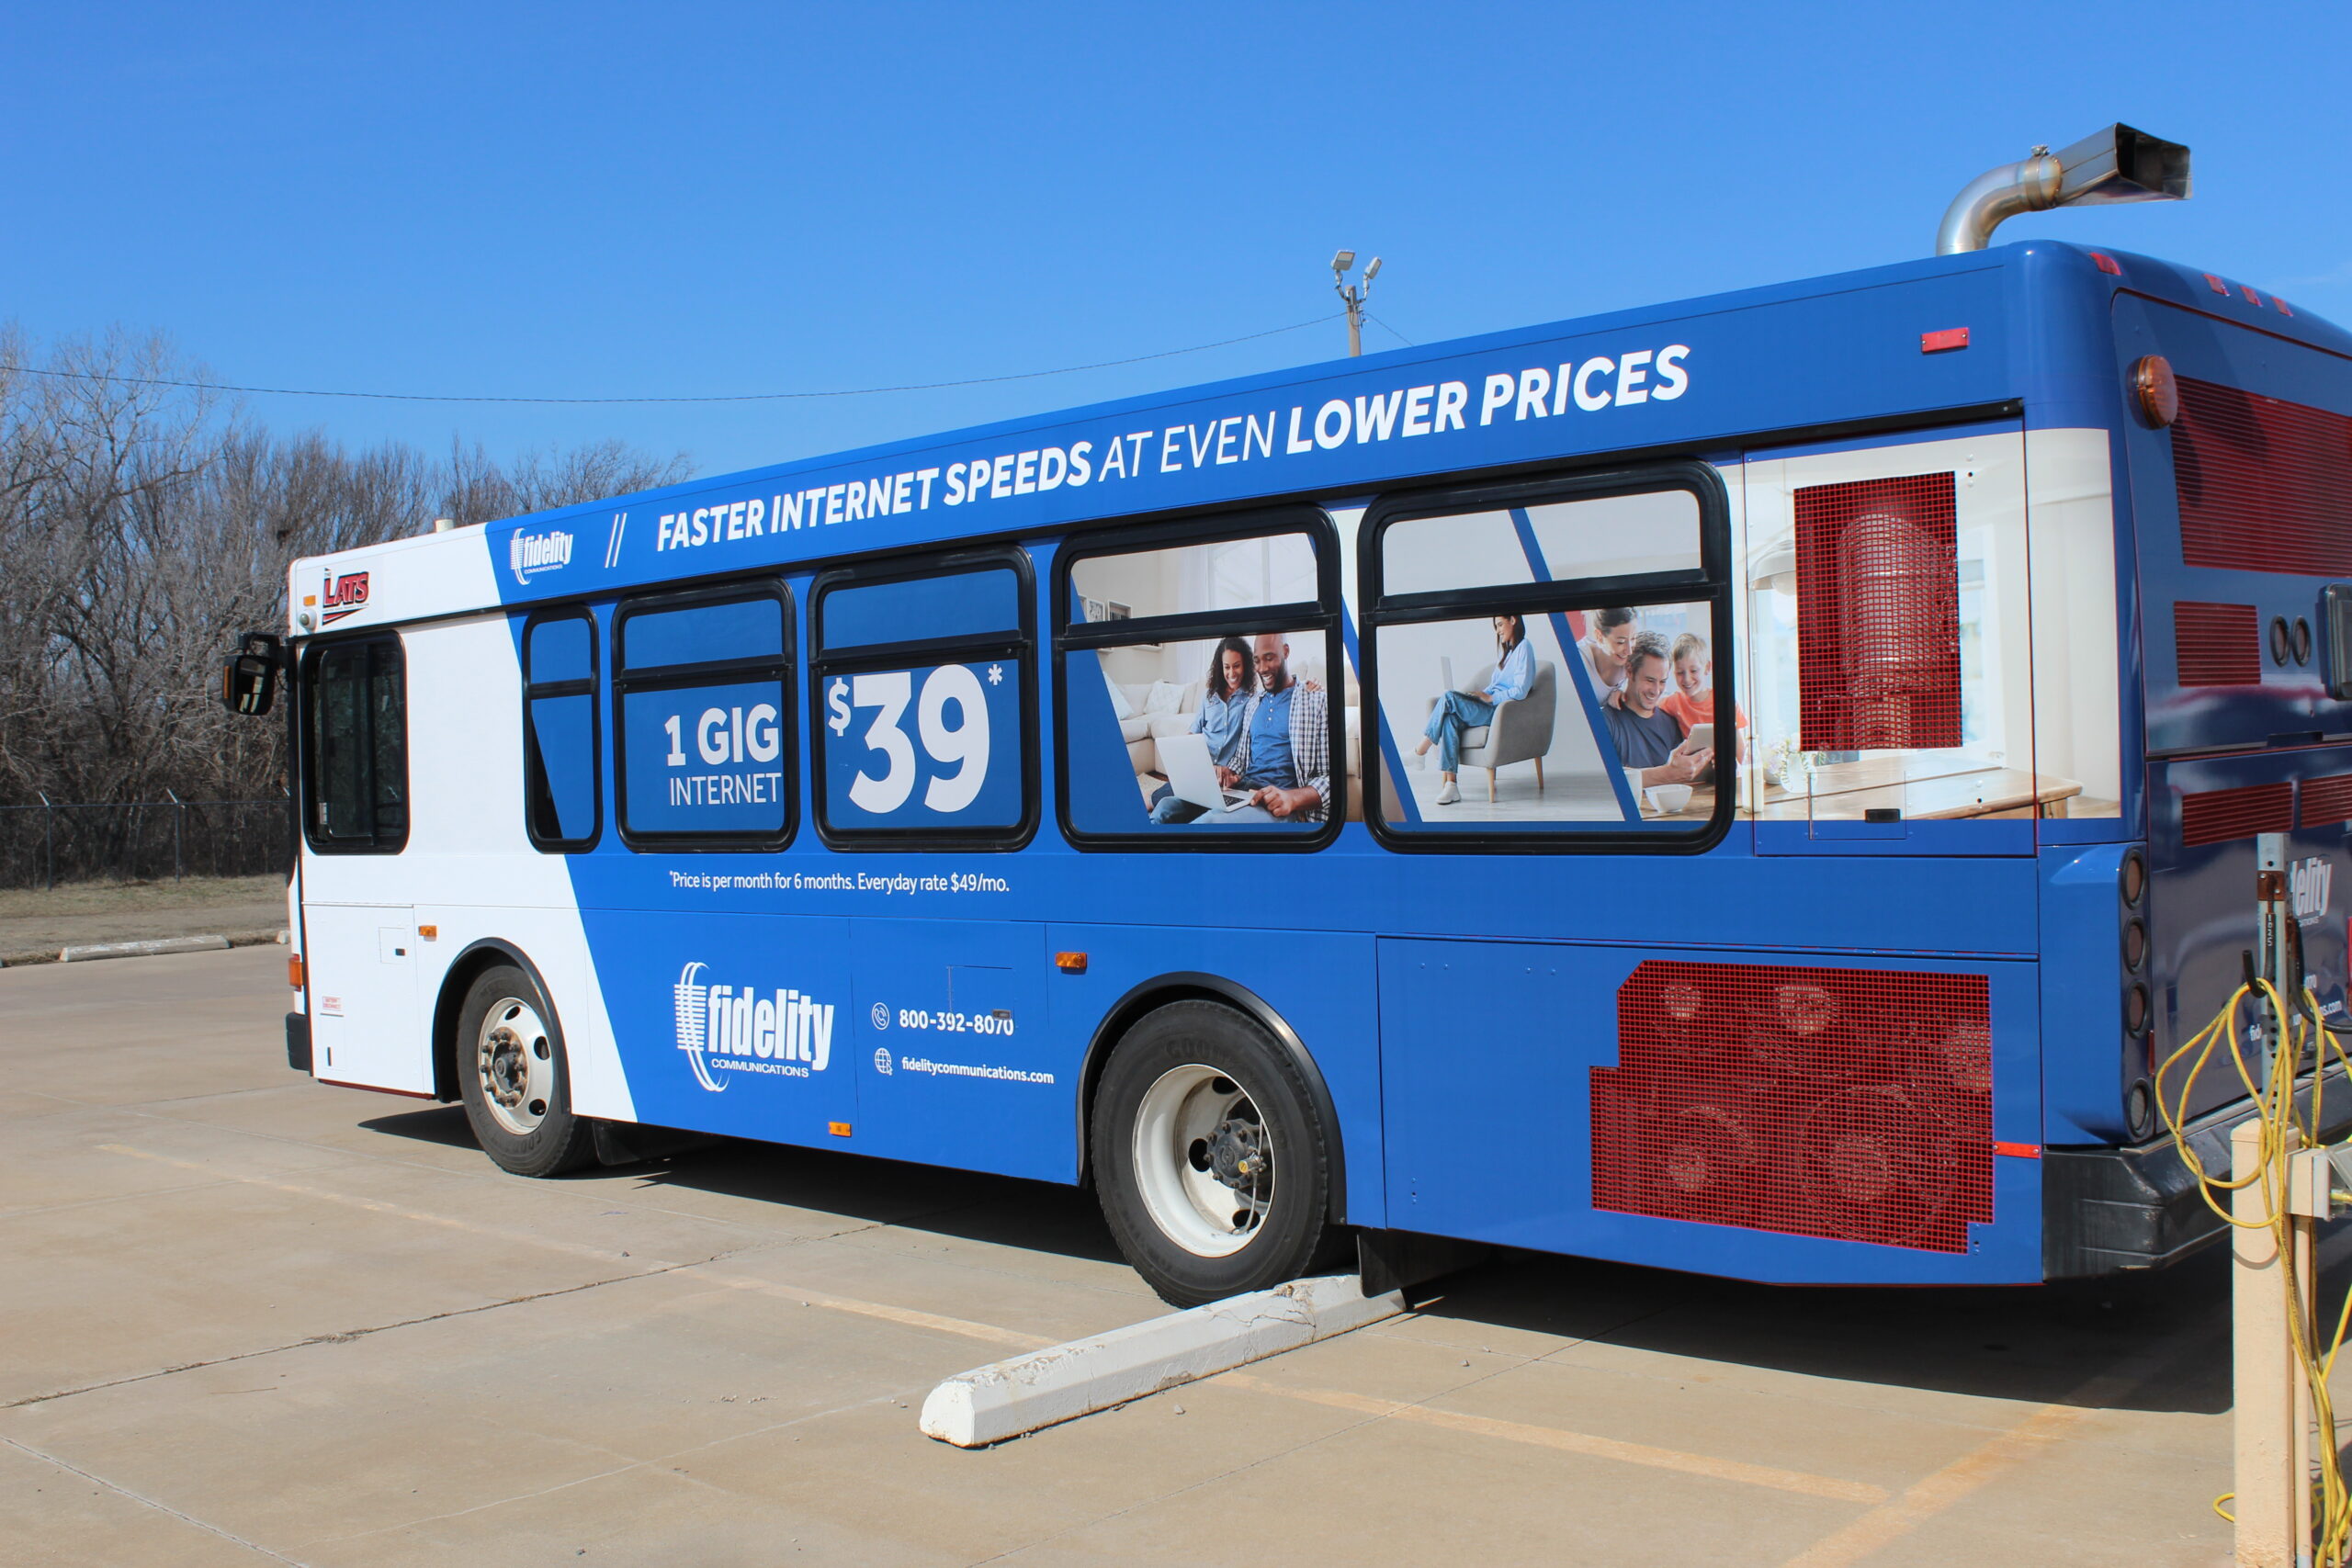 Fidelity Internet Provider bus drivers side